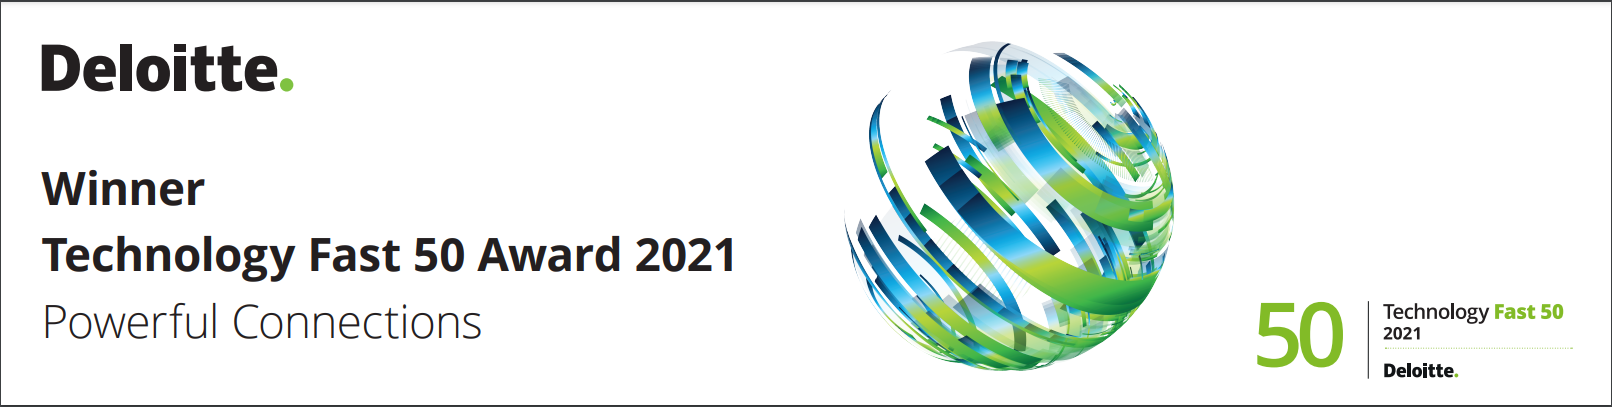 TechFast50-Award-2021-Banner-quantilope-EN